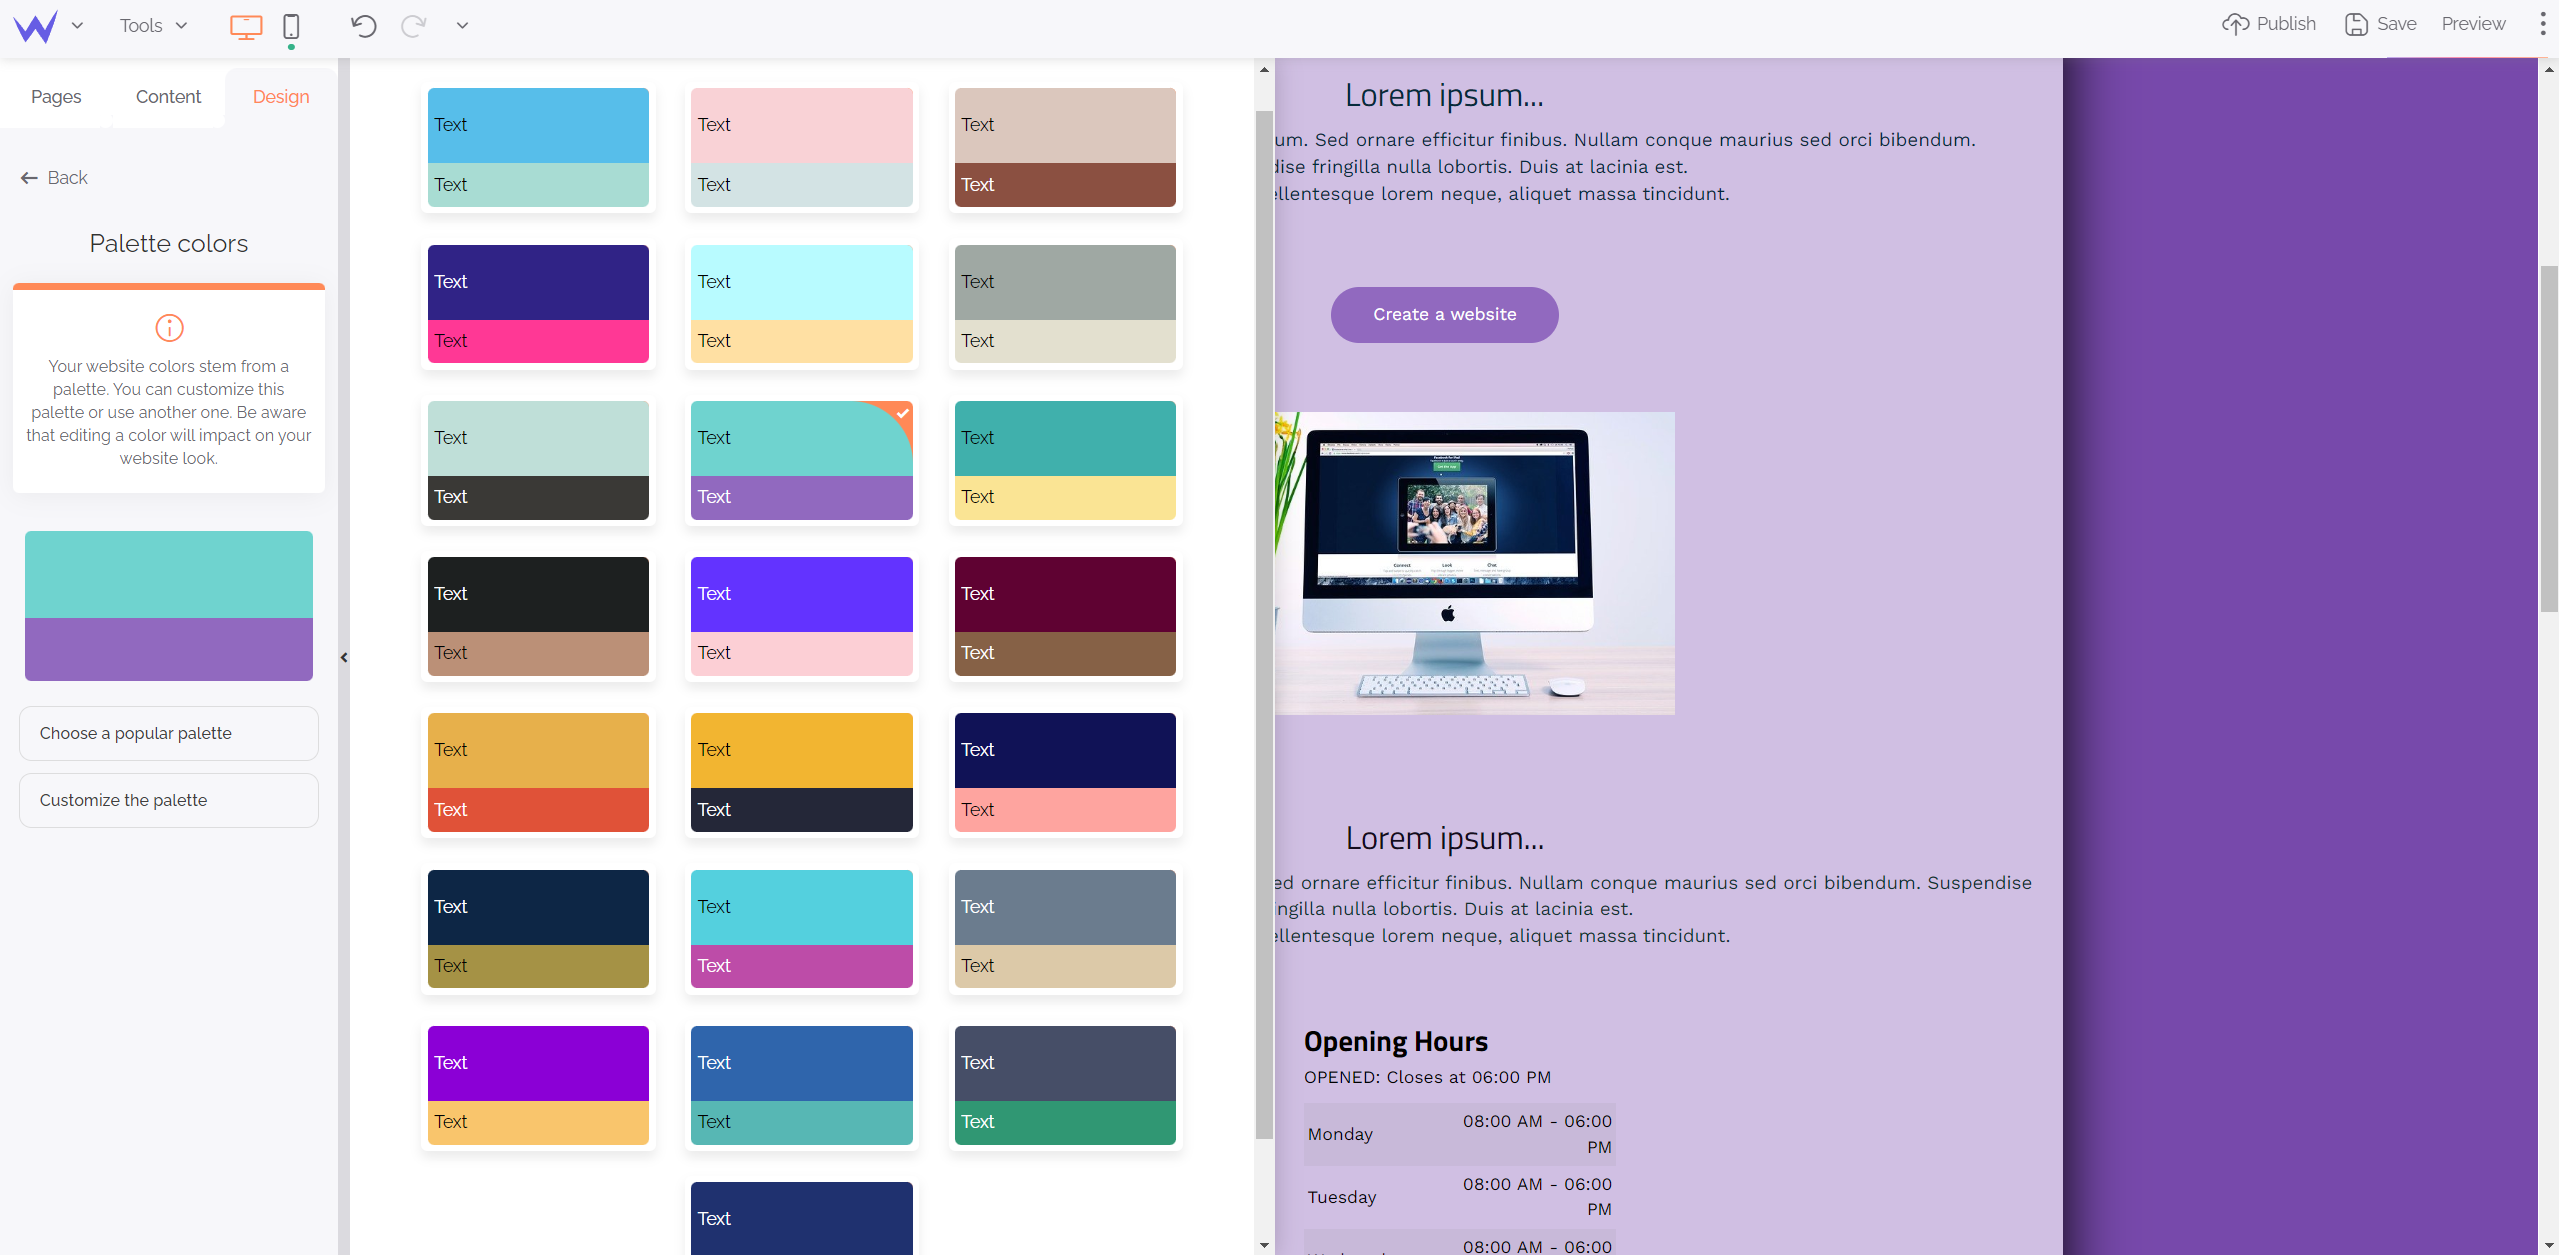 SiteW popular palette